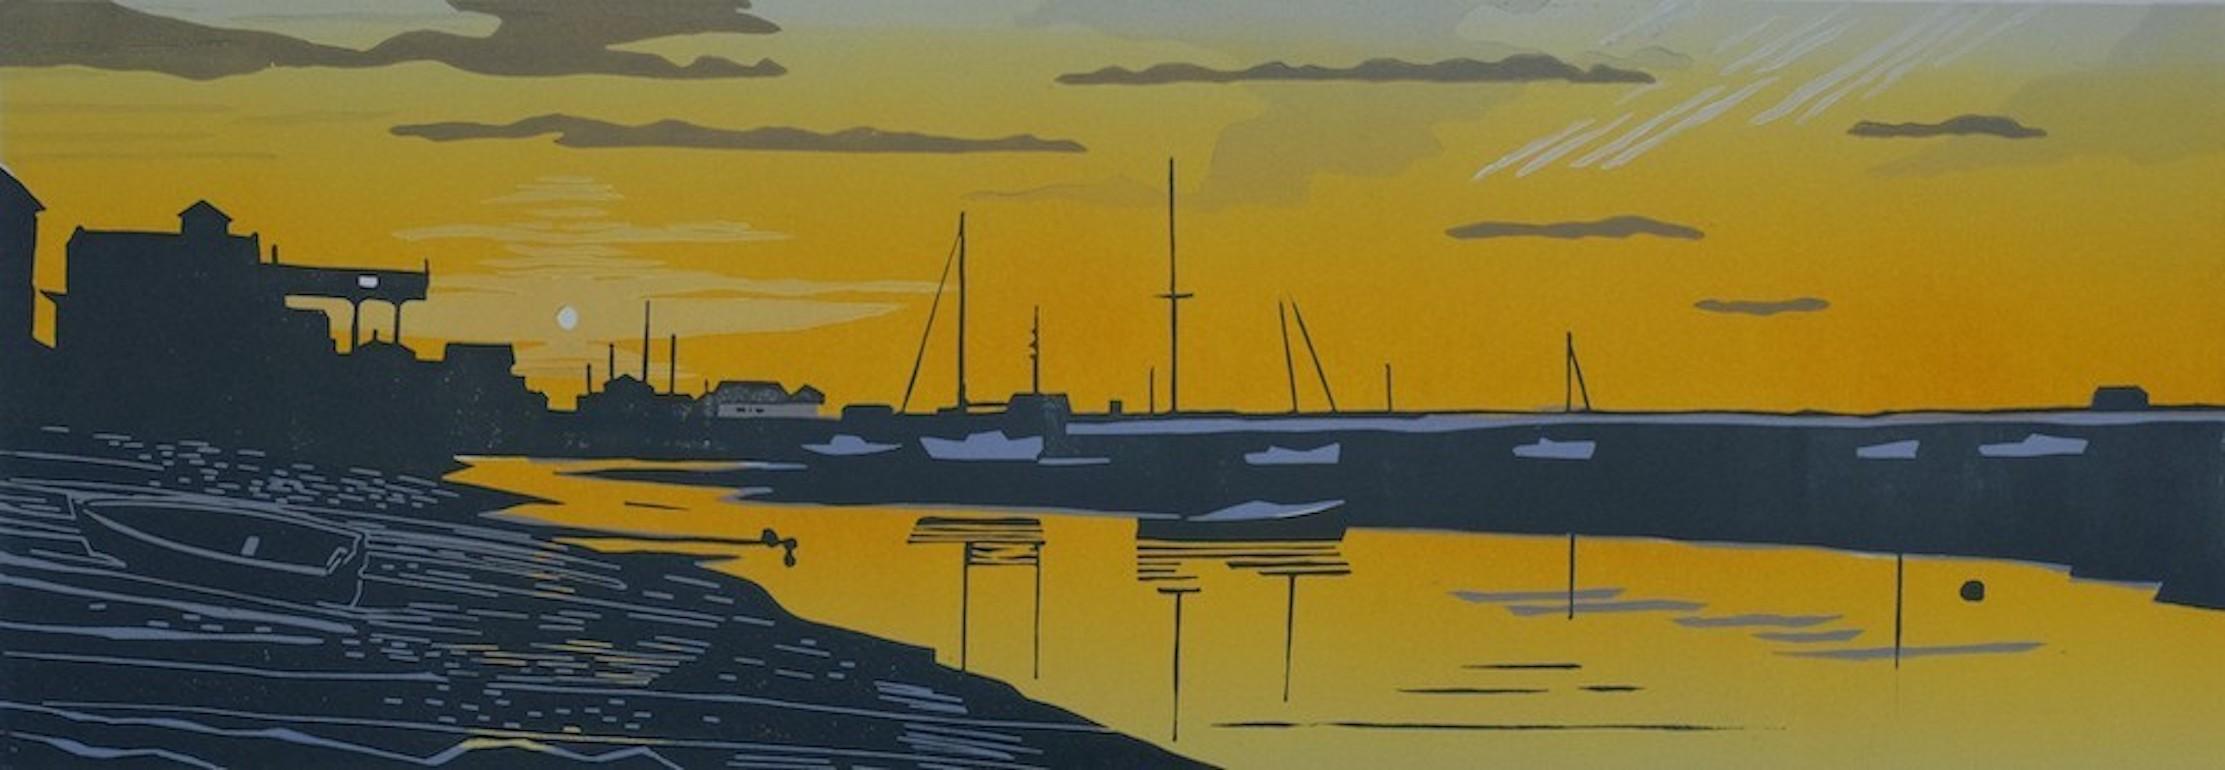 Colin Moore Landscape Print - Wells Sunset, Somerset, Lino print, Limited edition, Affordable art, Coastal sea